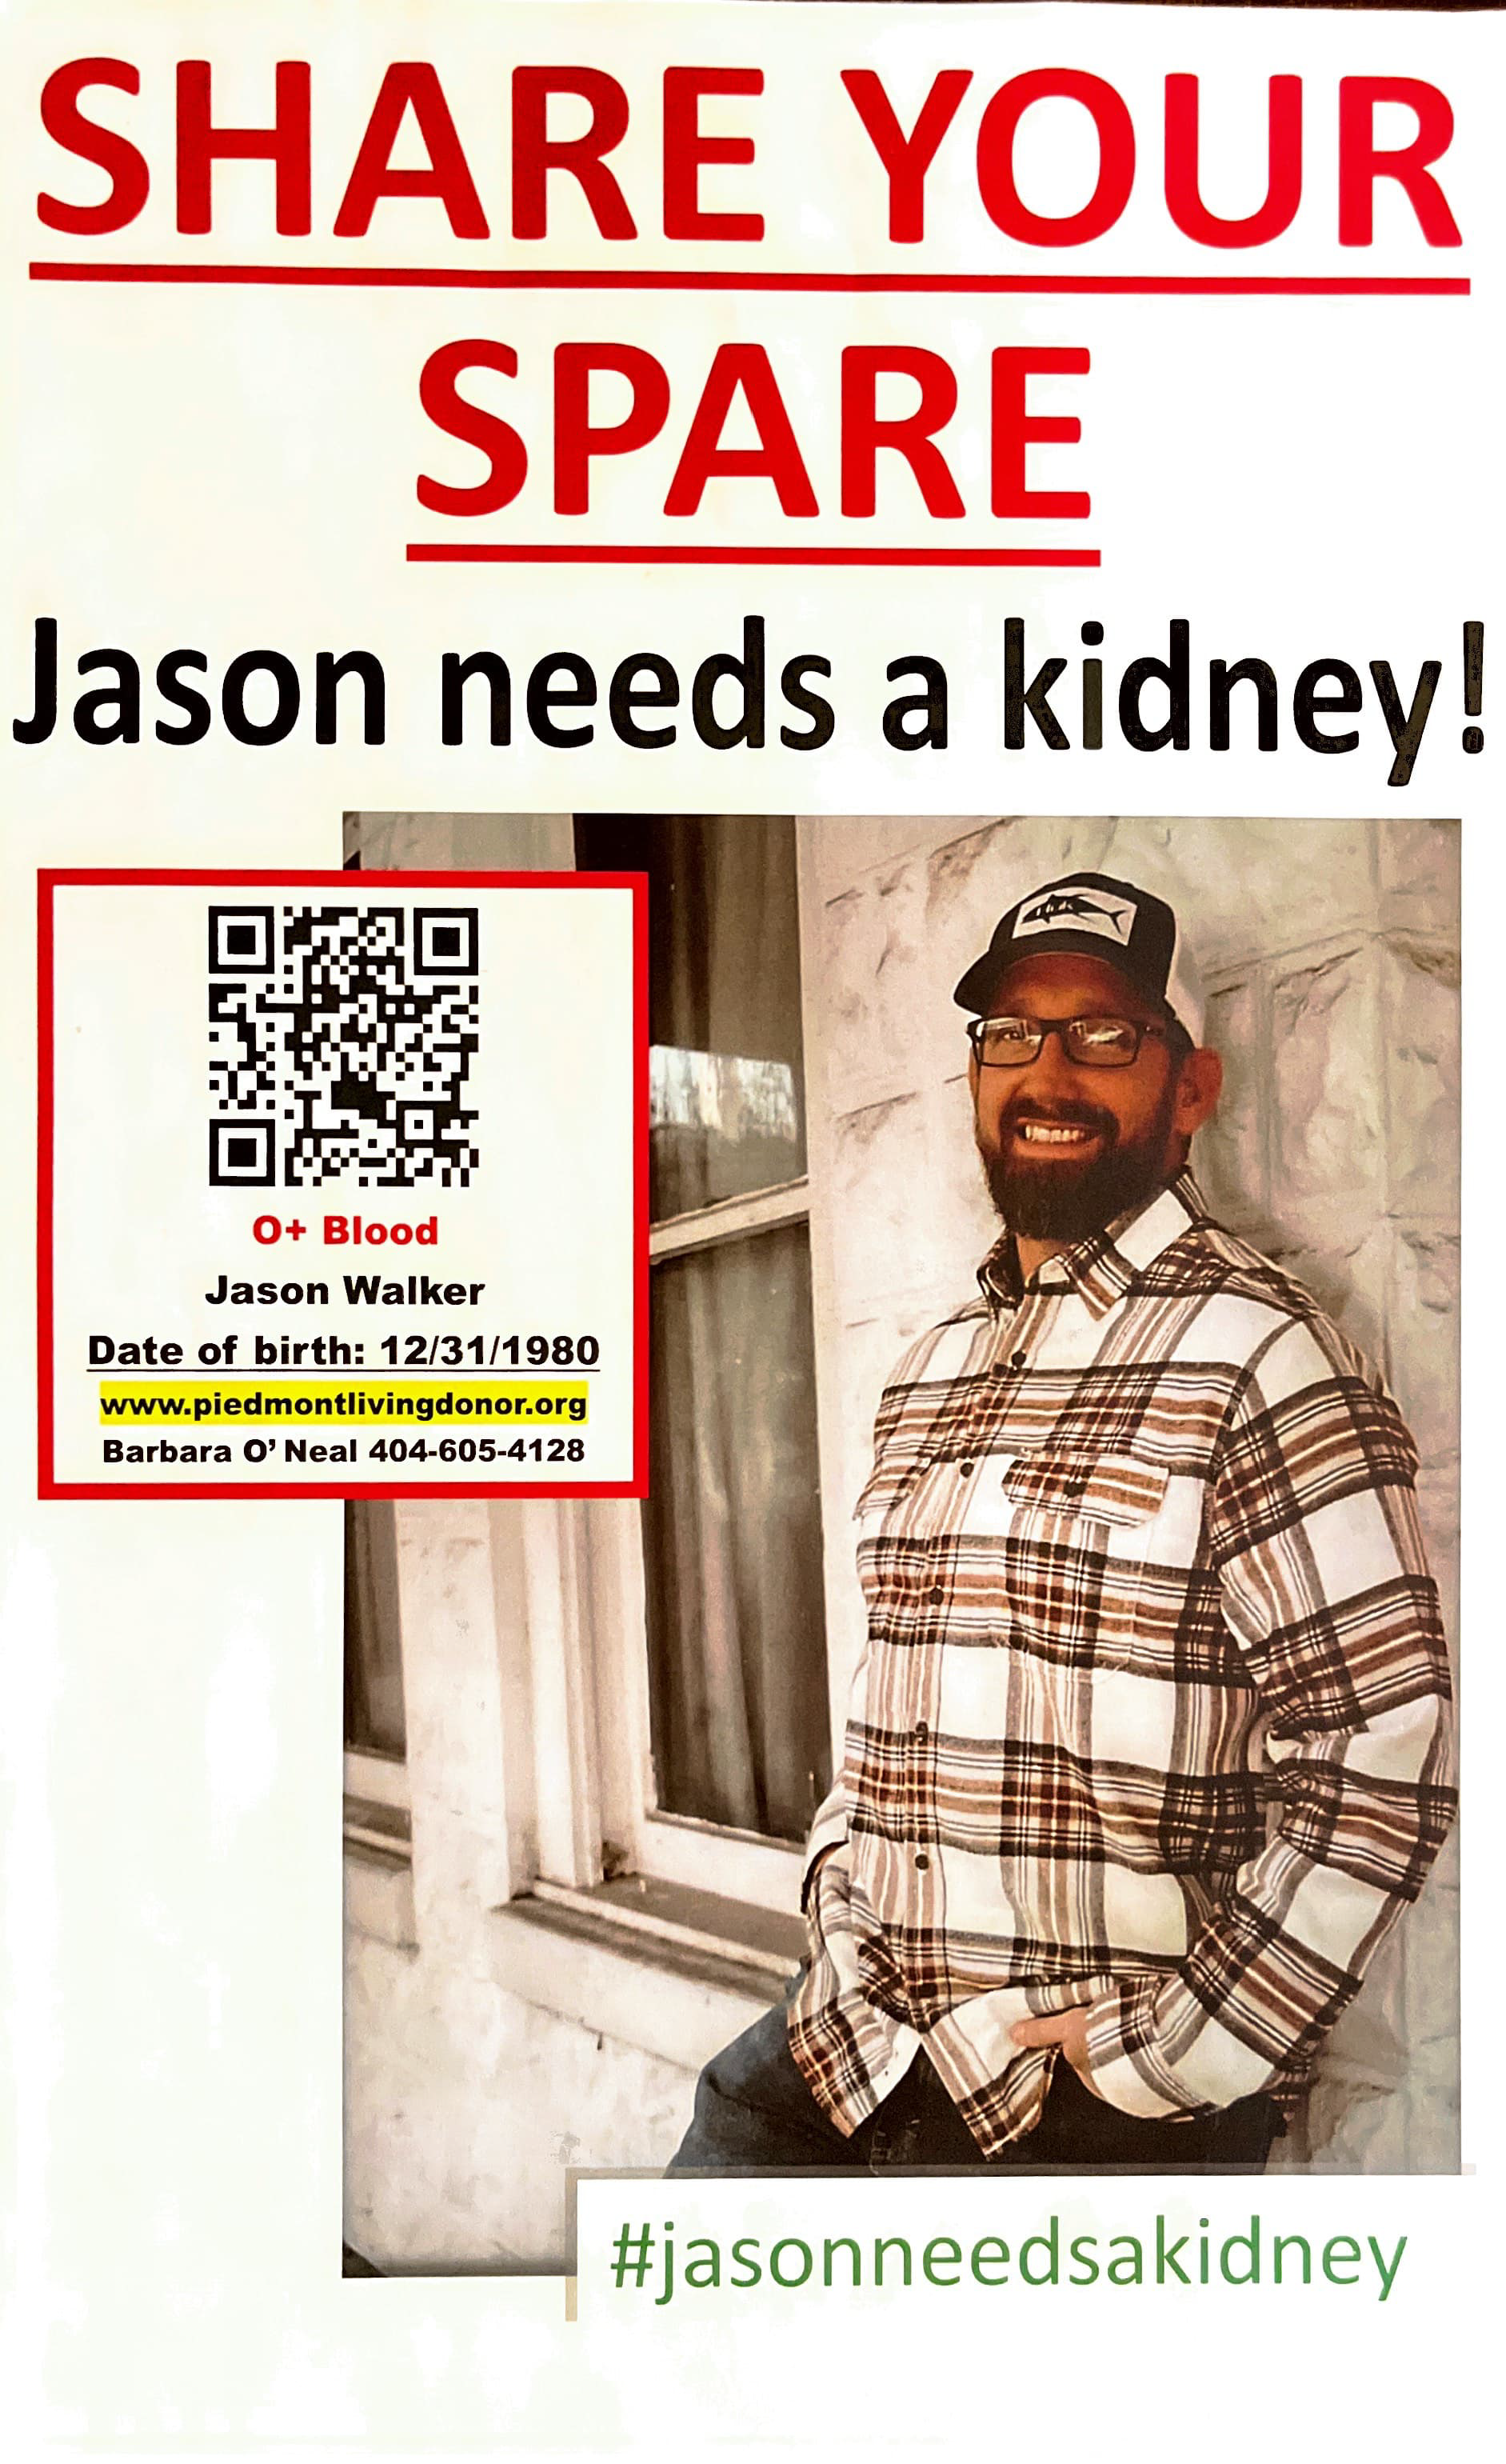 Jason needs a kidney